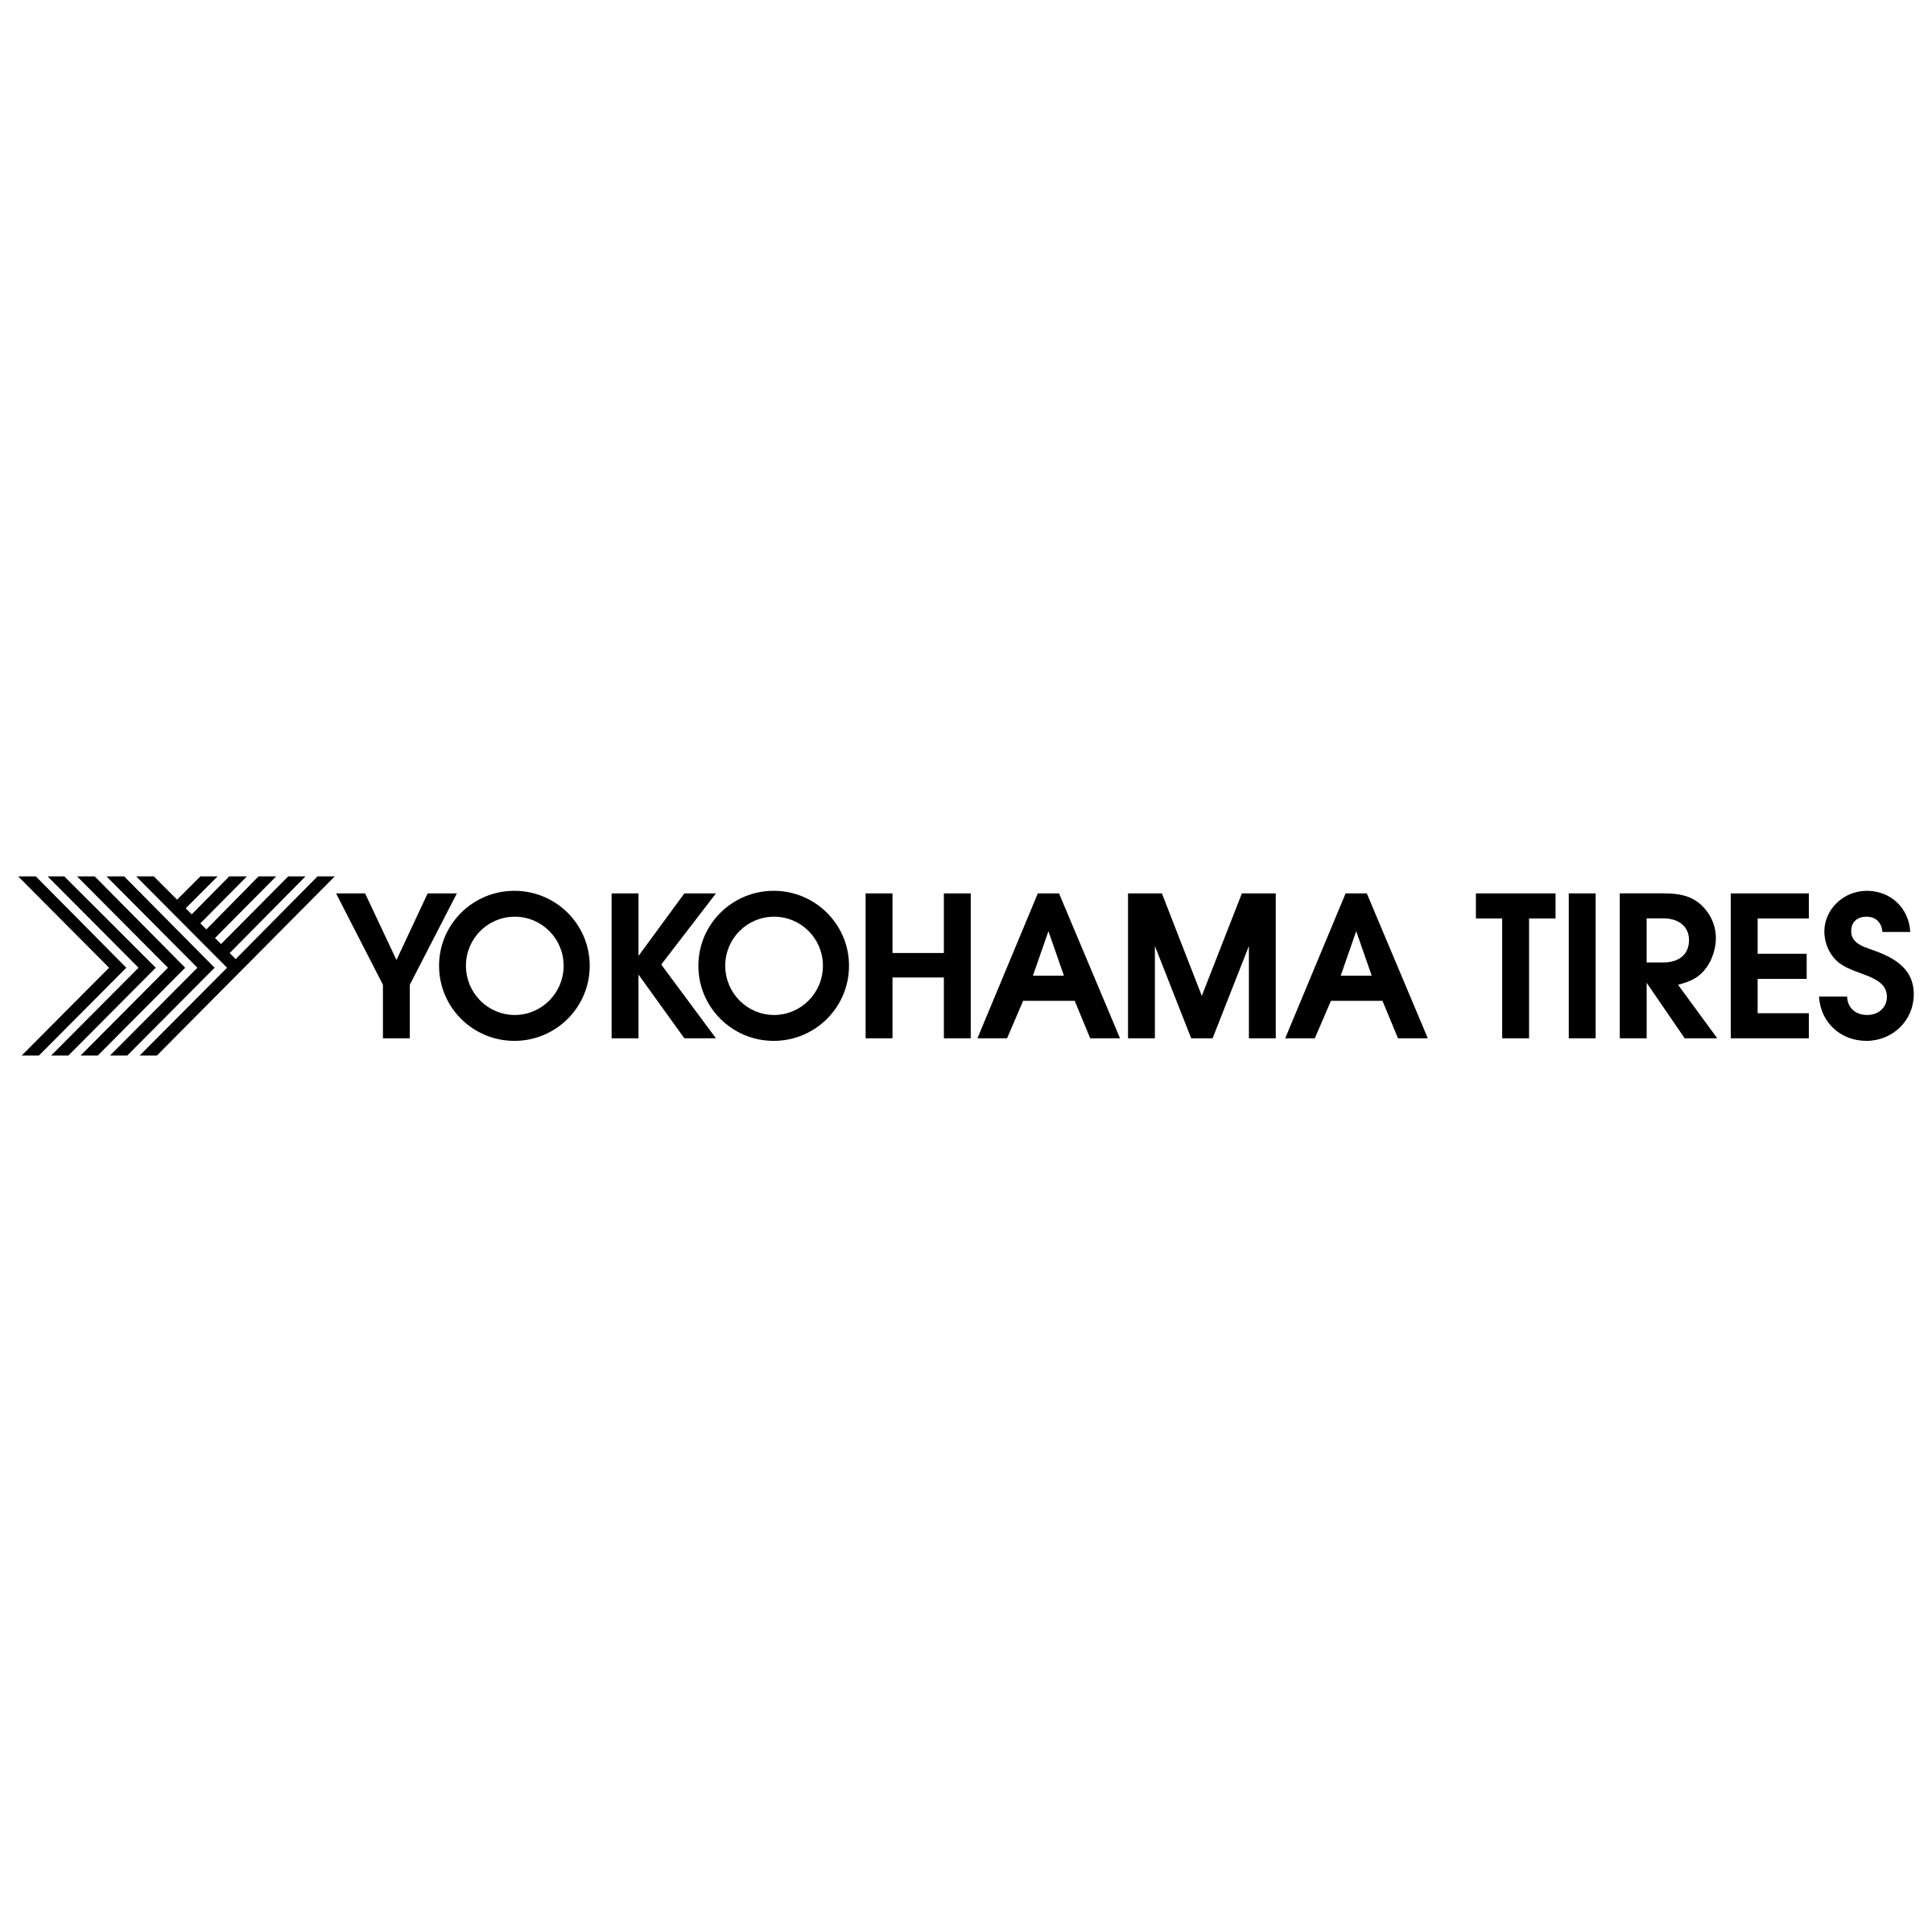 Yokohama Logo - Yokohama Tires Logo PNG Transparent & SVG Vector - Freebie Supply